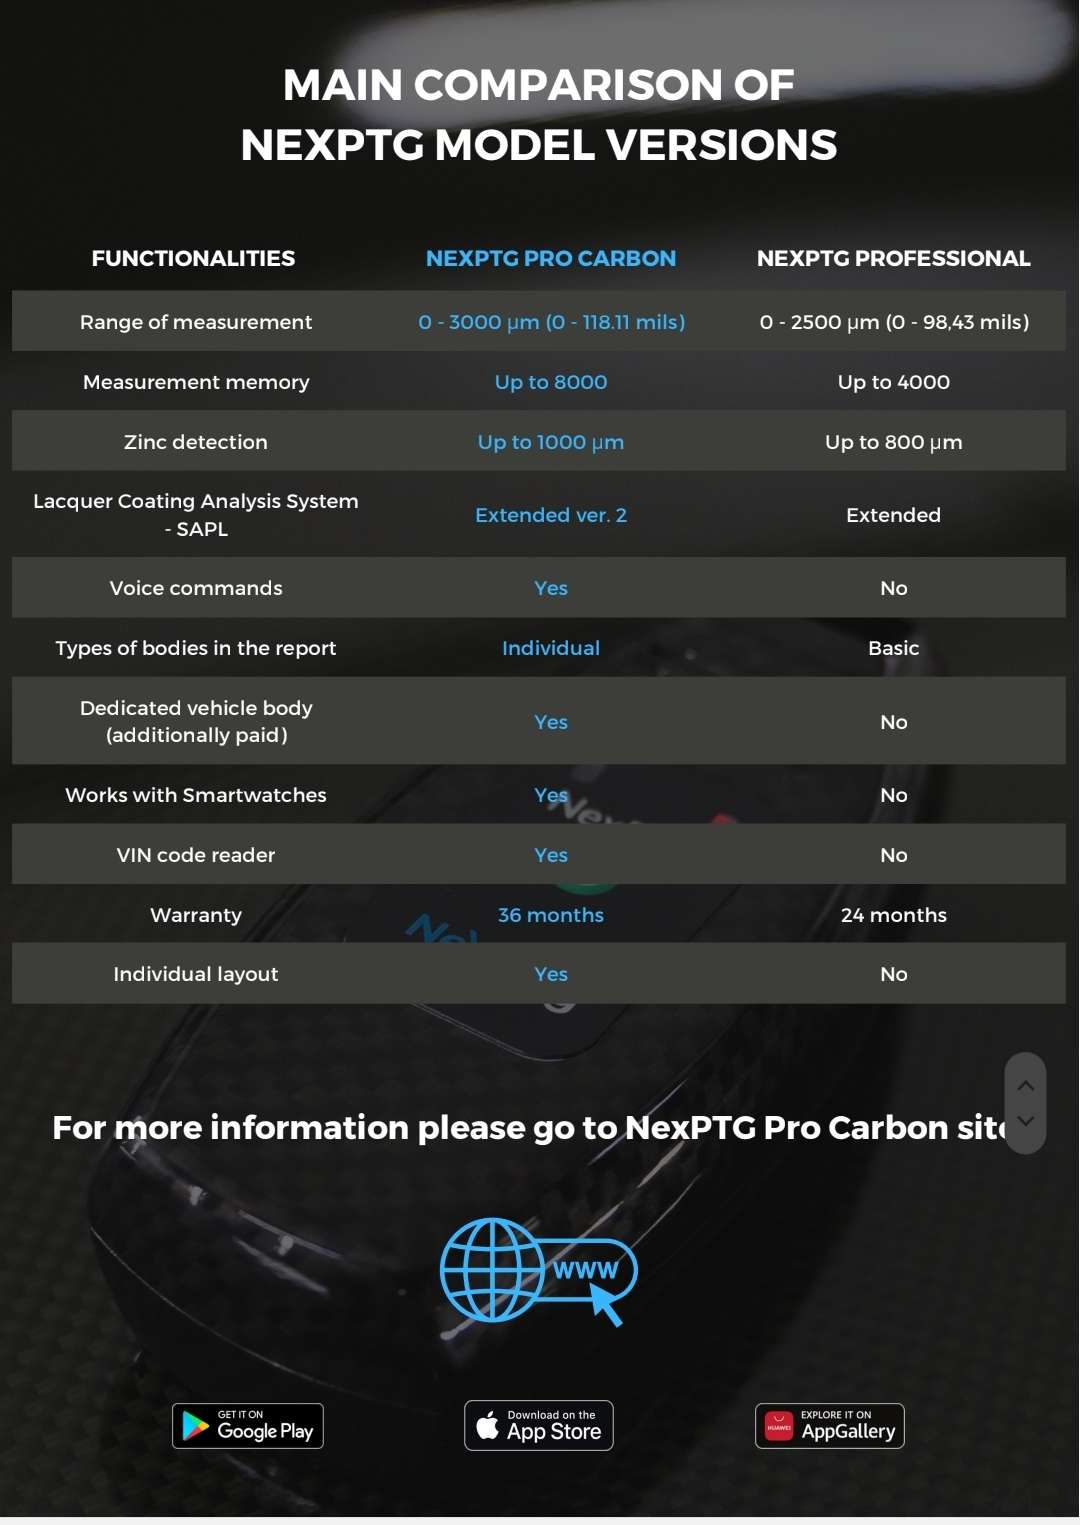 NexPTG Pro Carbon